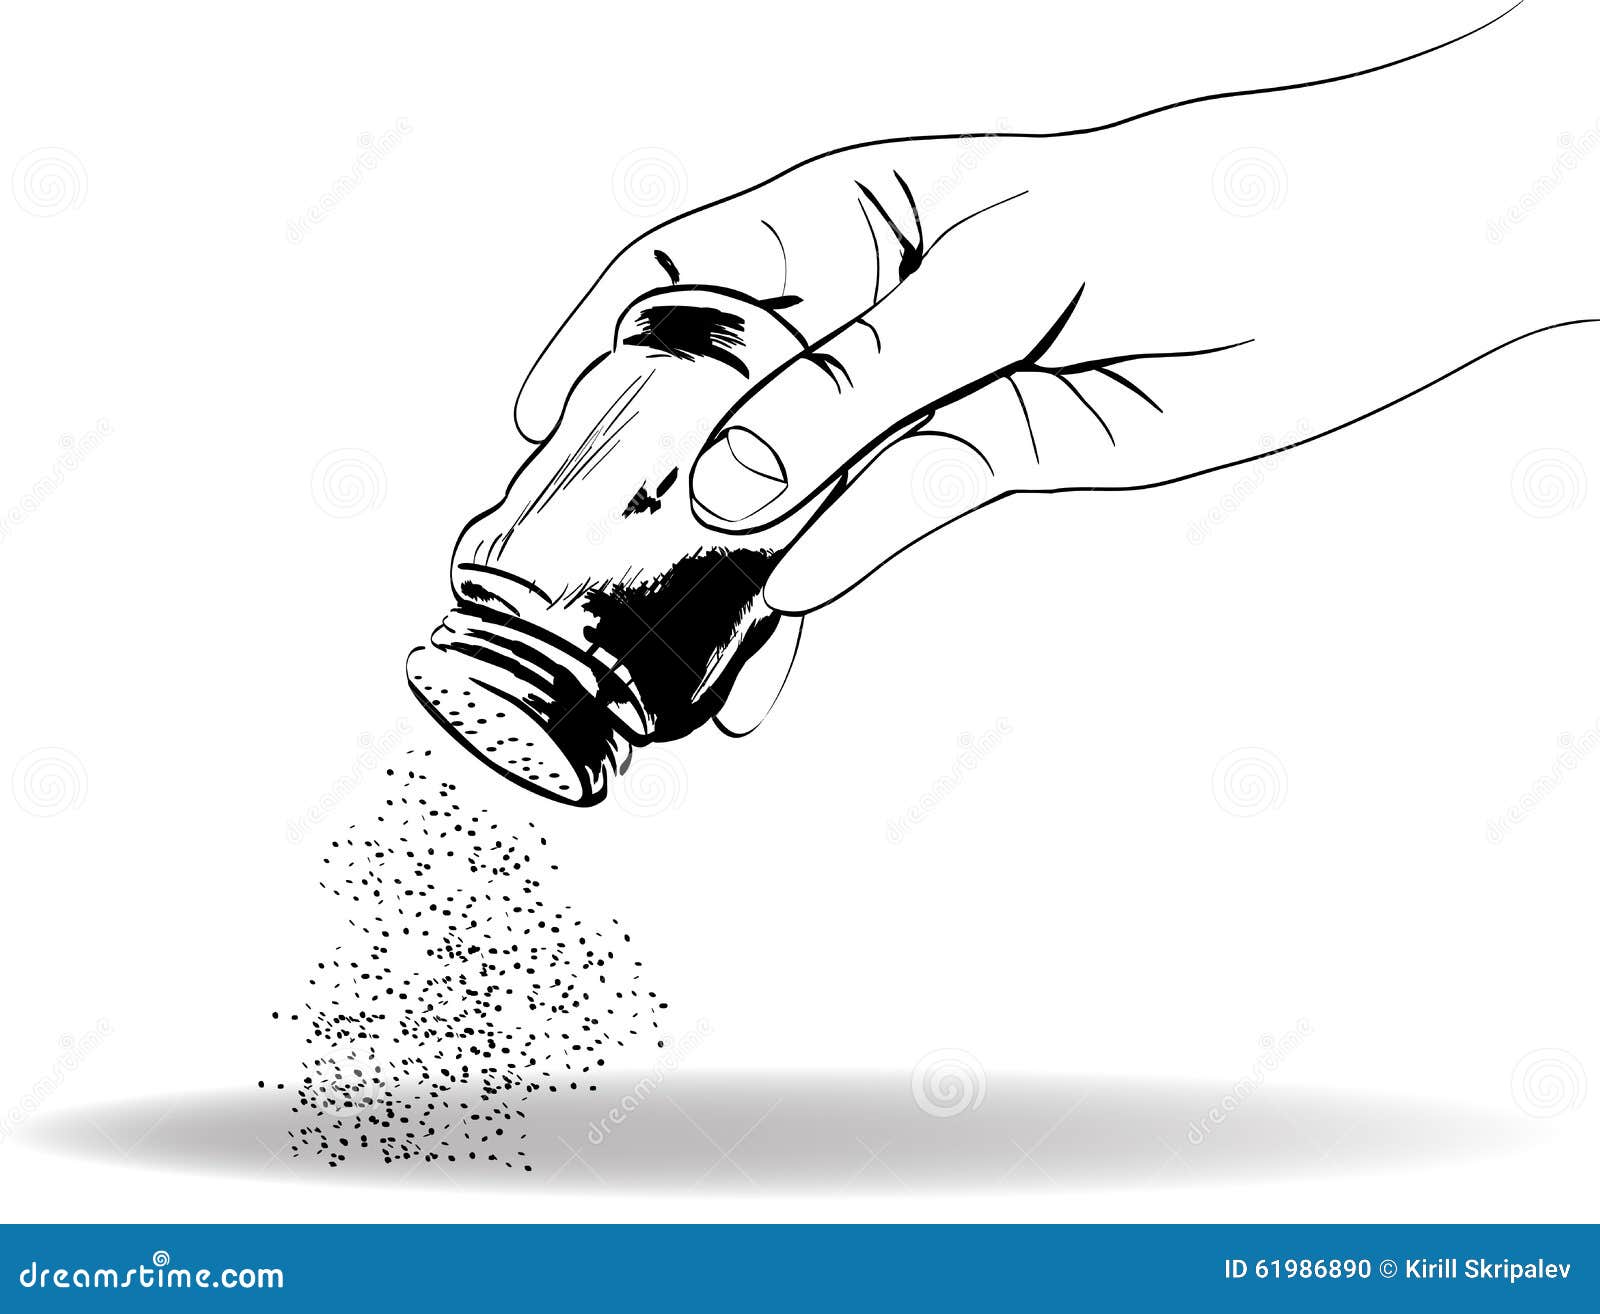 Hand with the salt shaker stock illustration. Illustration of hand